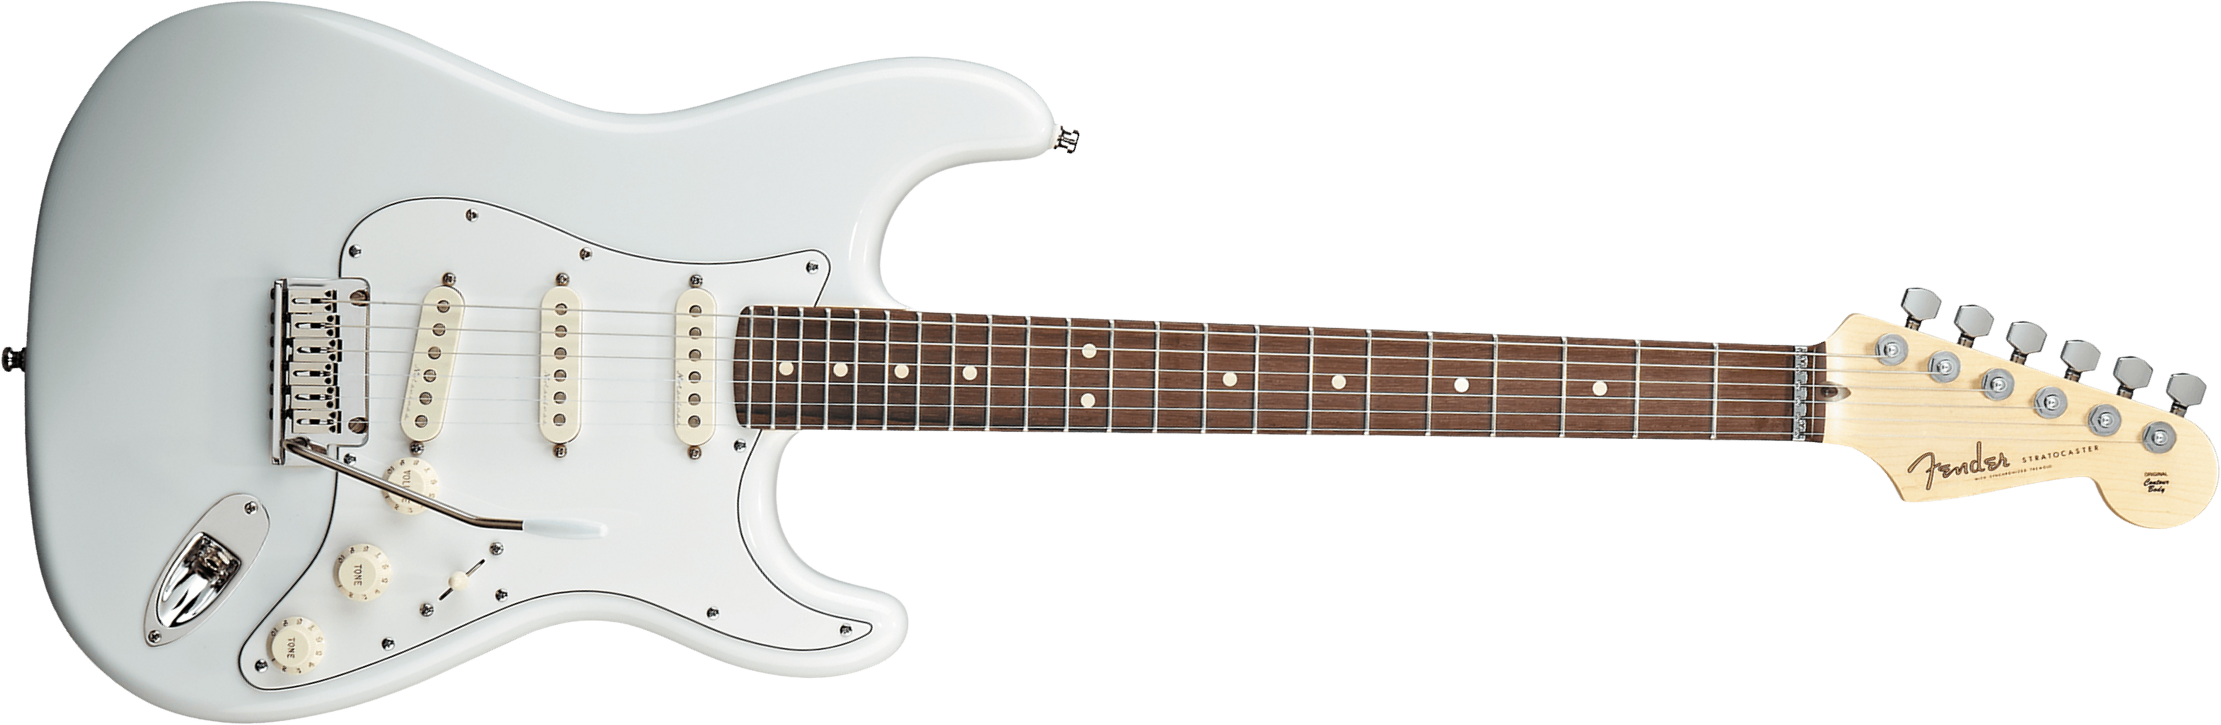 Fender Custom Shop Jeff Beck Strat 3s Trem Rw - Nos Olympic White - Str shape electric guitar - Main picture